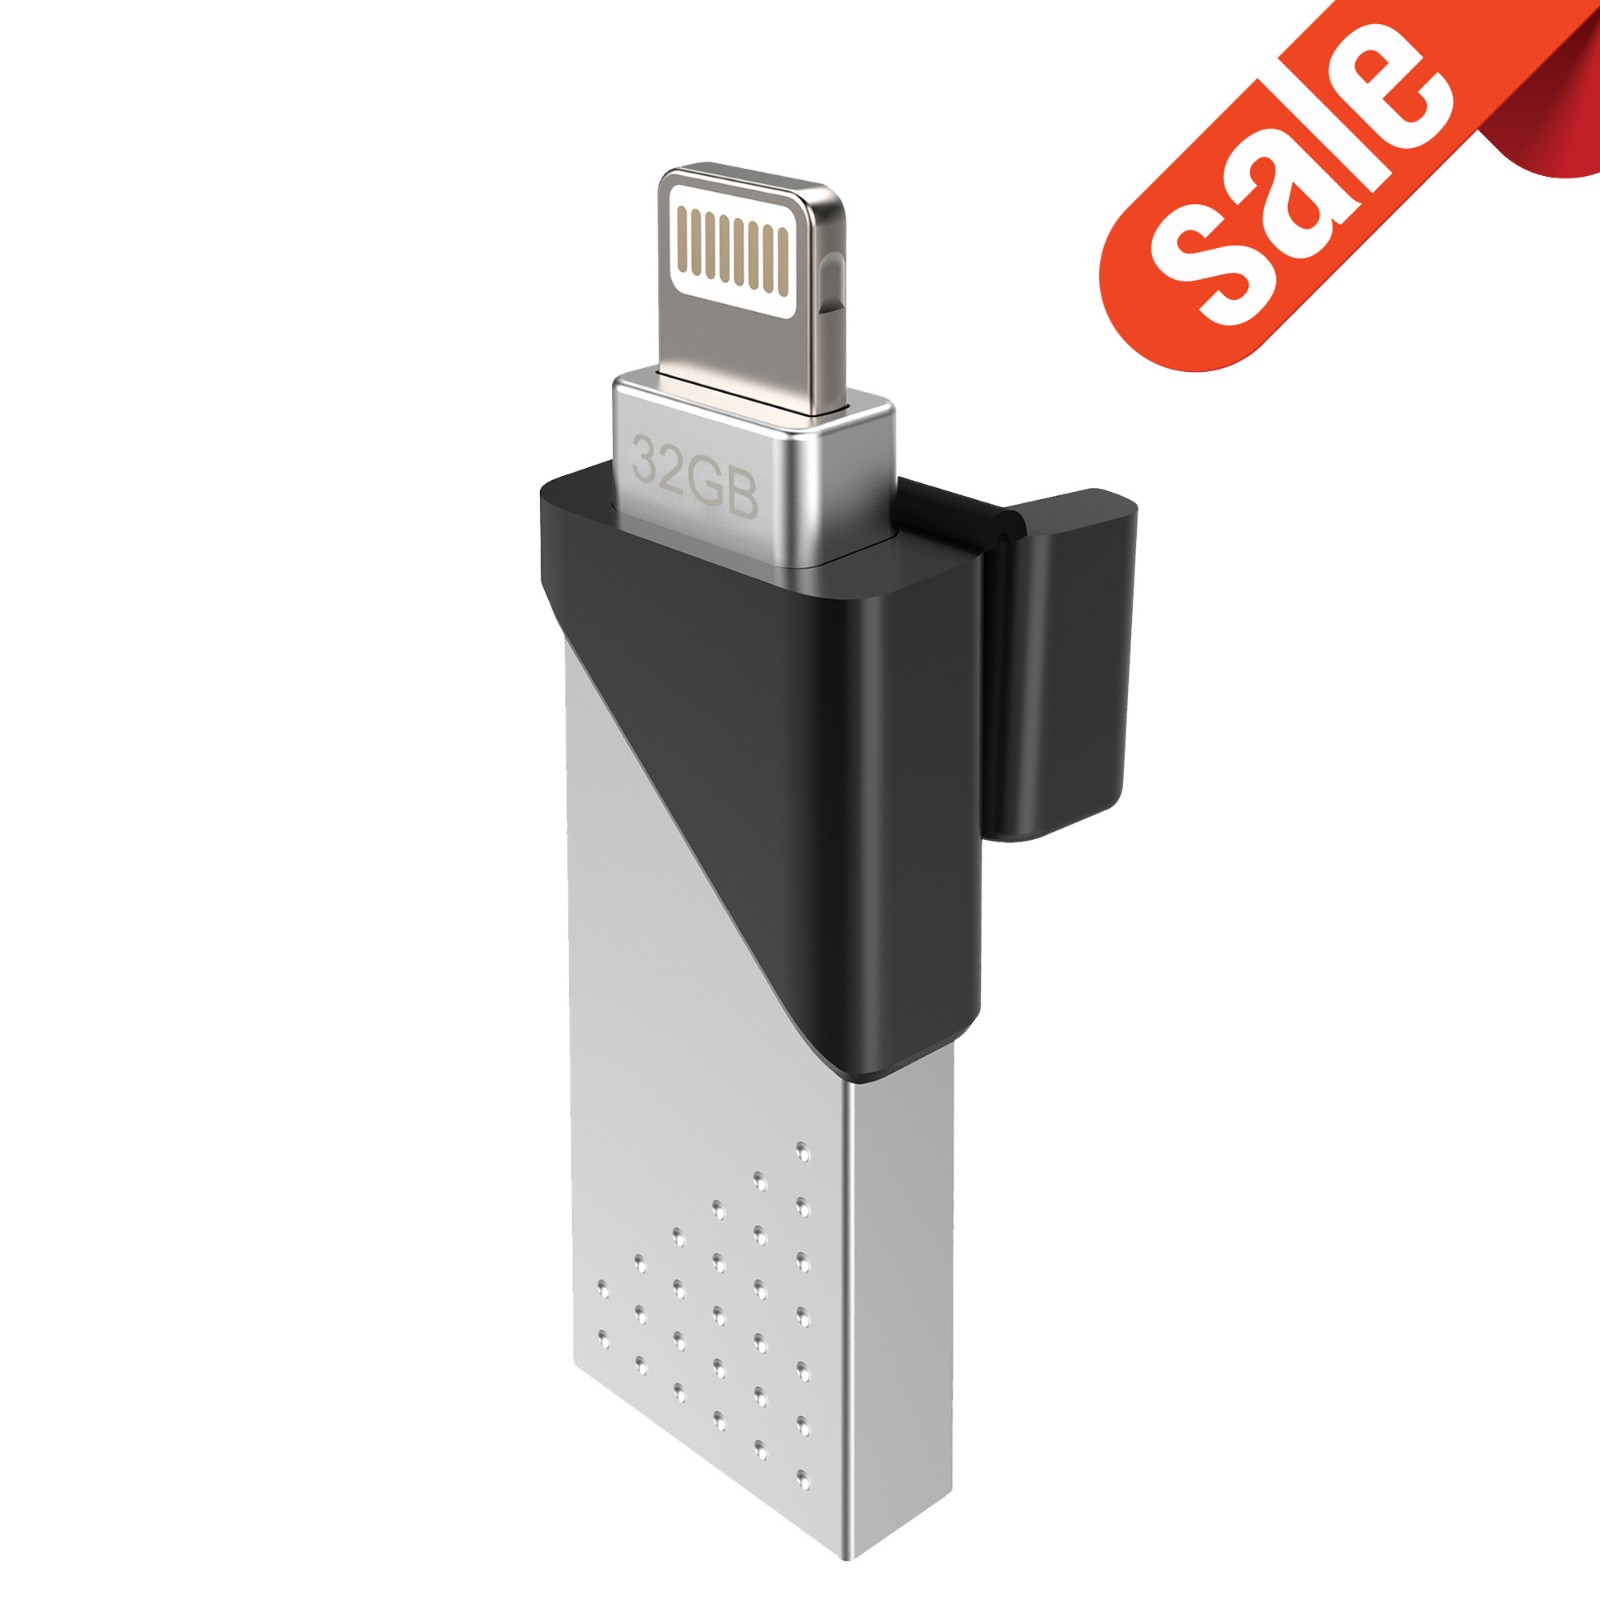 Silicon Power 32GB Z50 OTG Flash Drive for iPhone & iPad (Lightning/USB 3.1 Gen1)